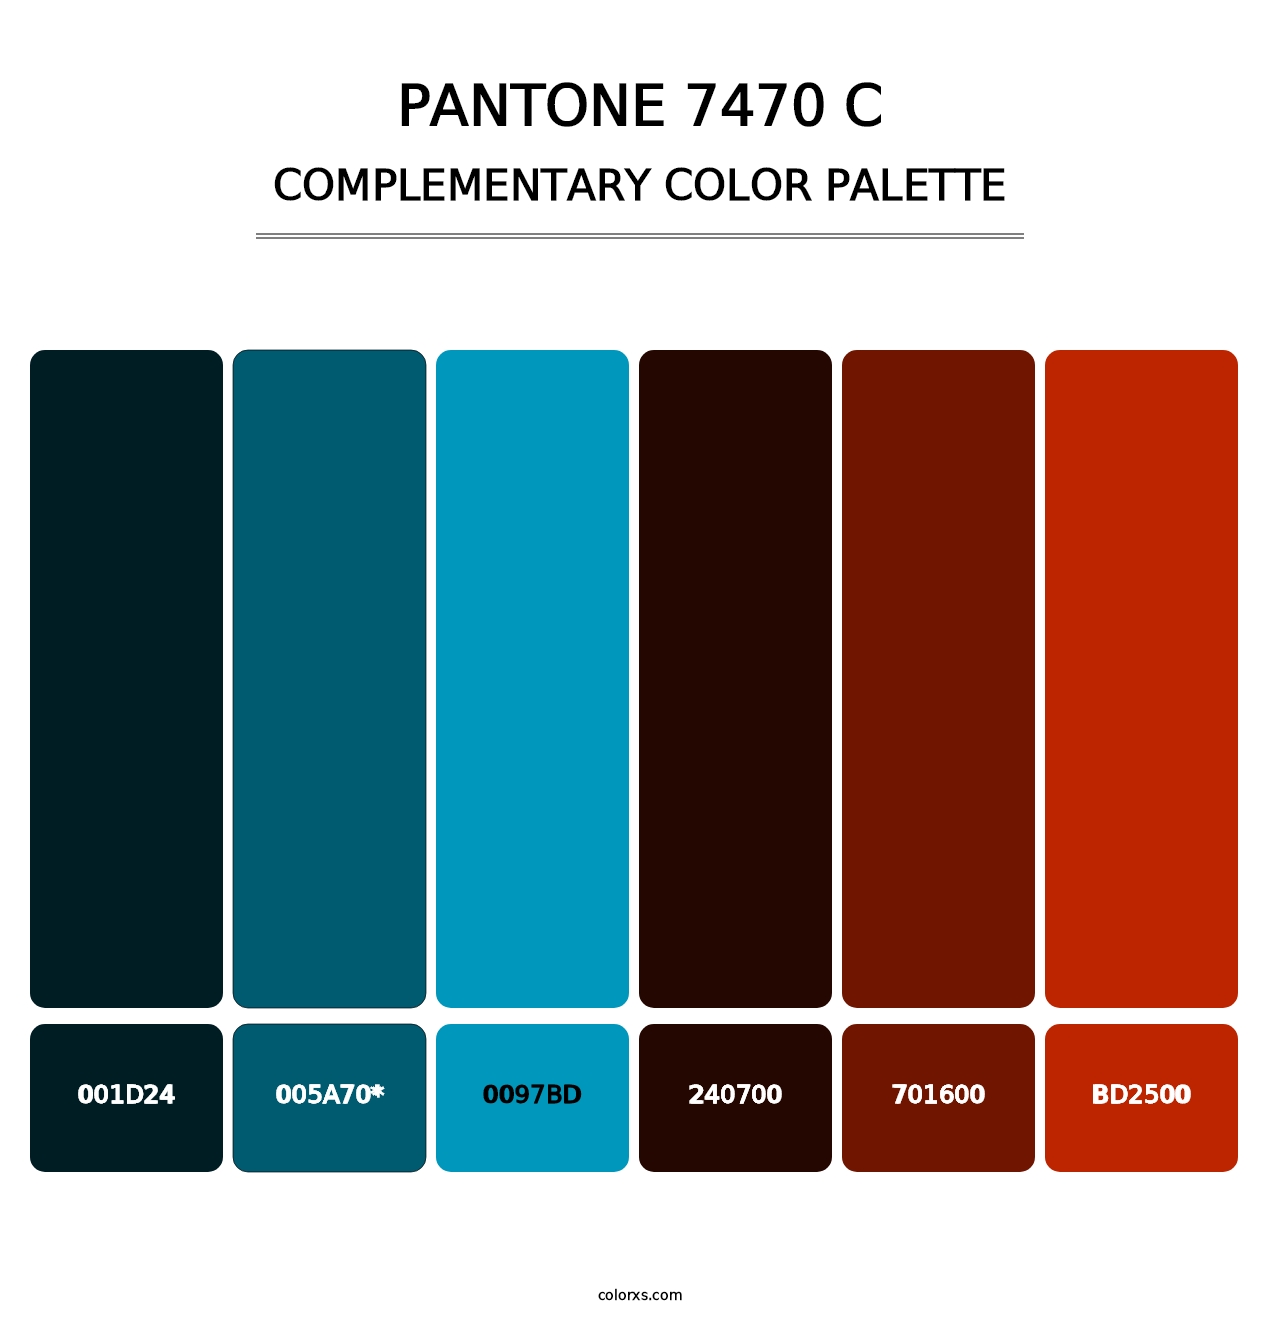 PANTONE 7470 C - Complementary Color Palette